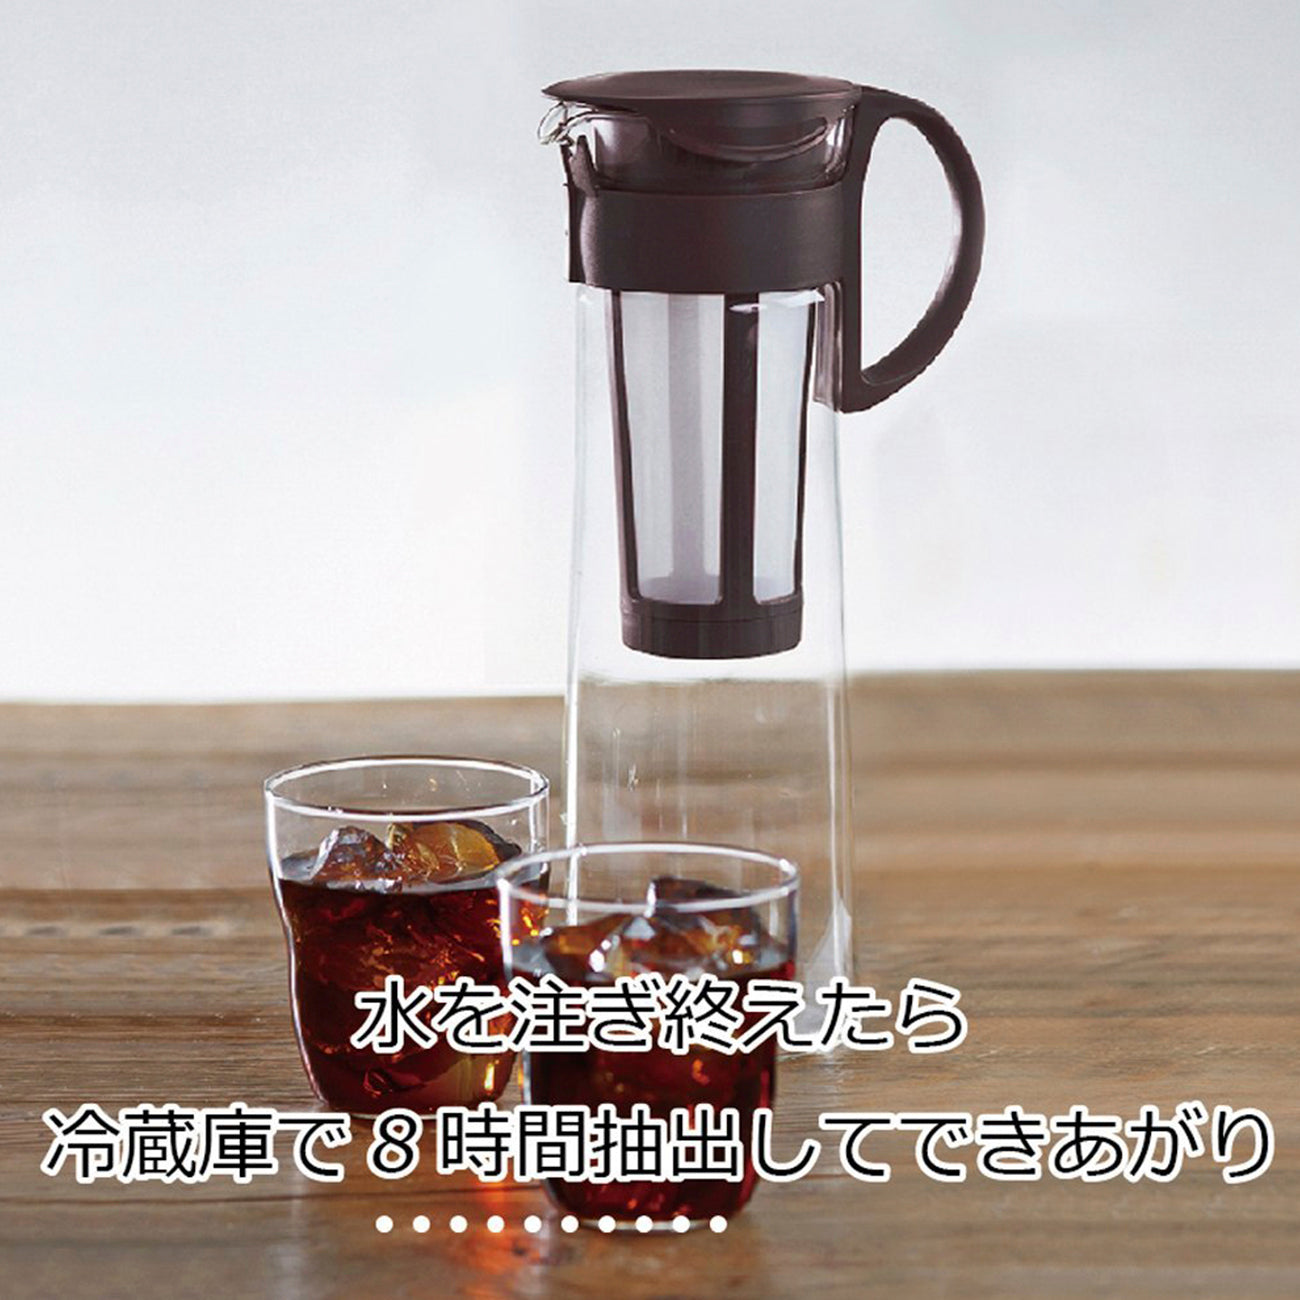 Hario Mizudashi Cold Brew Coffee Maker